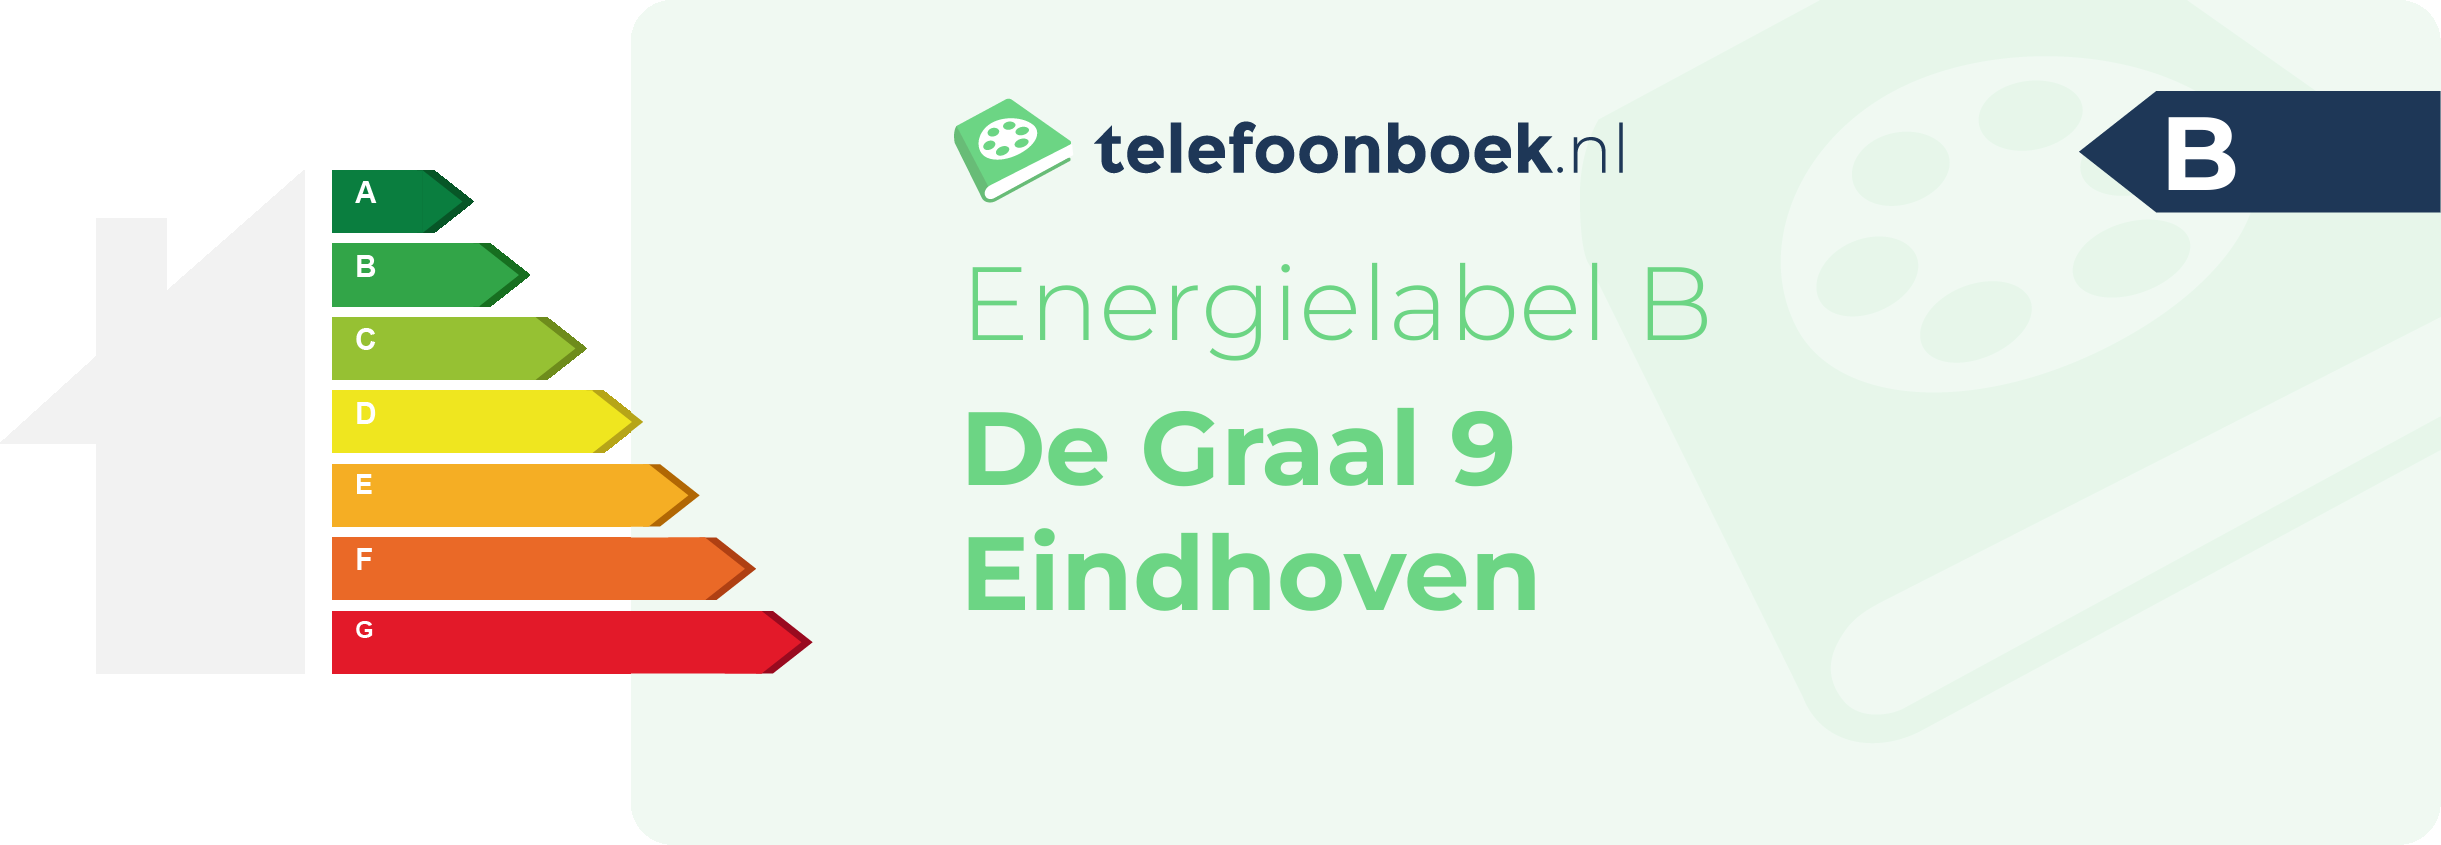 Energielabel De Graal 9 Eindhoven